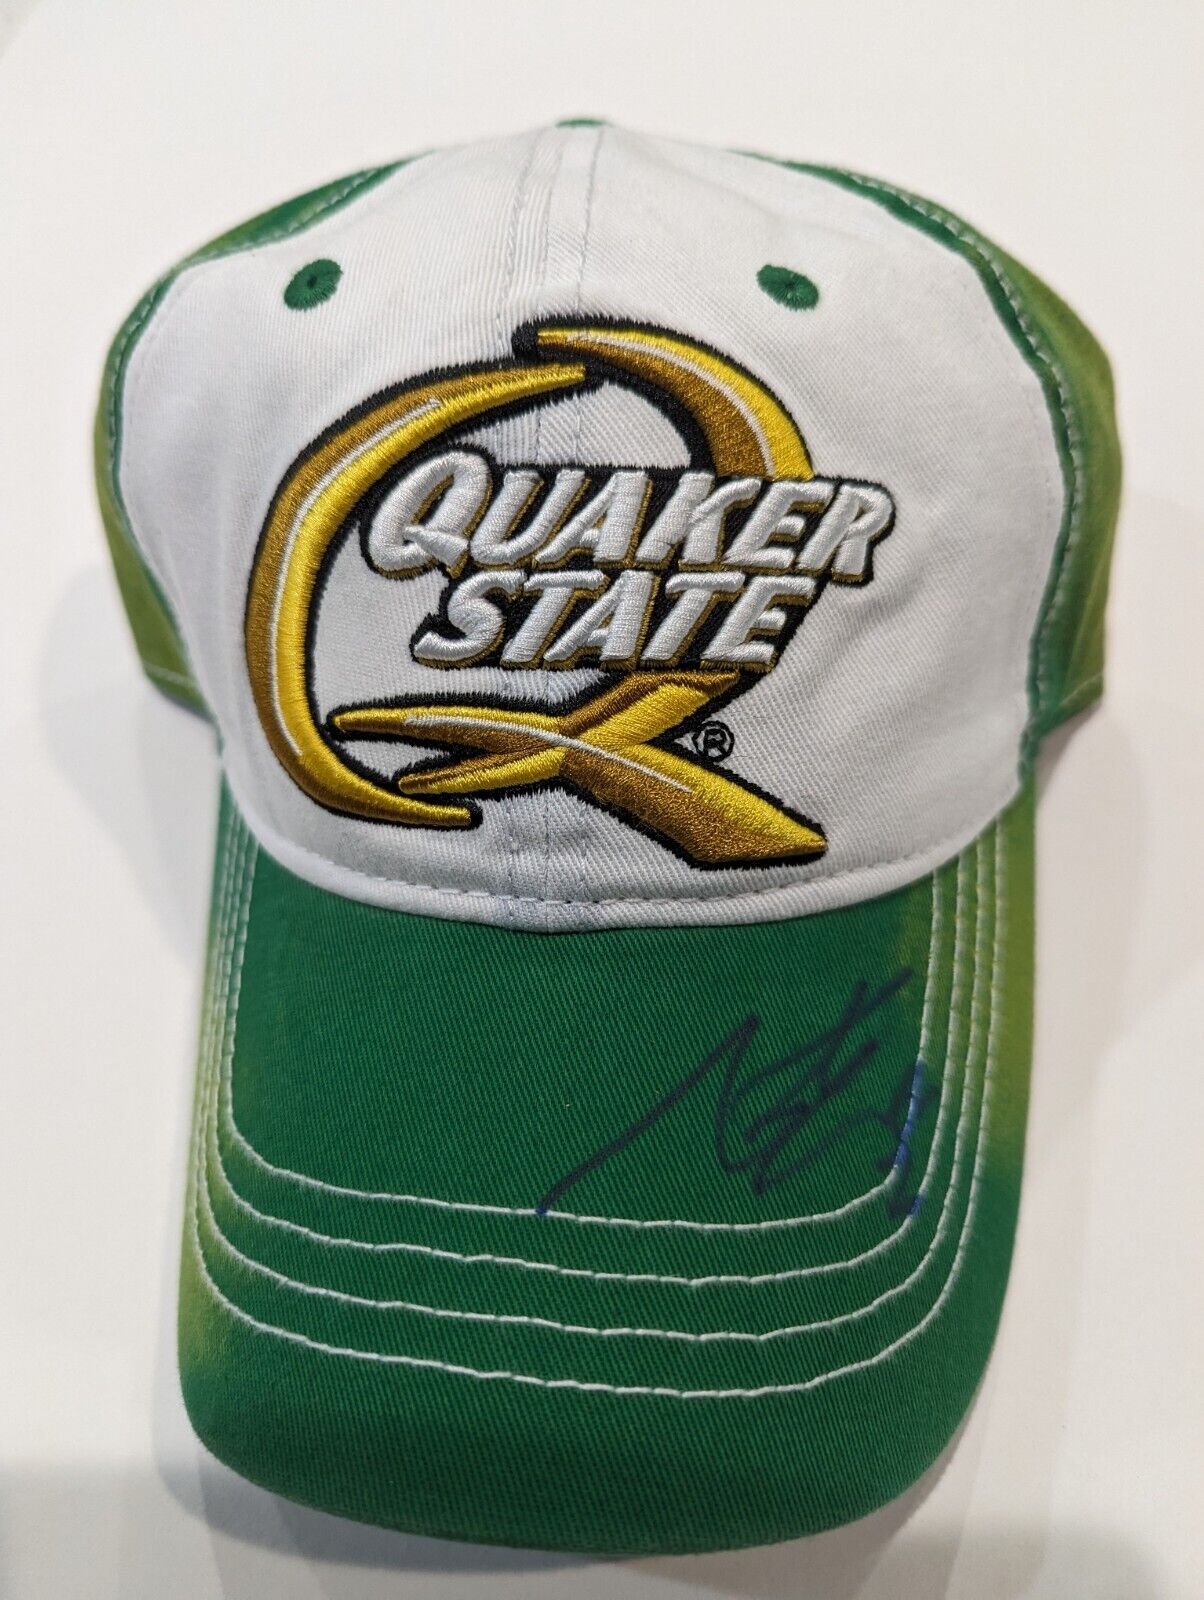 Austin Cindric Autographed Quaker State Hat